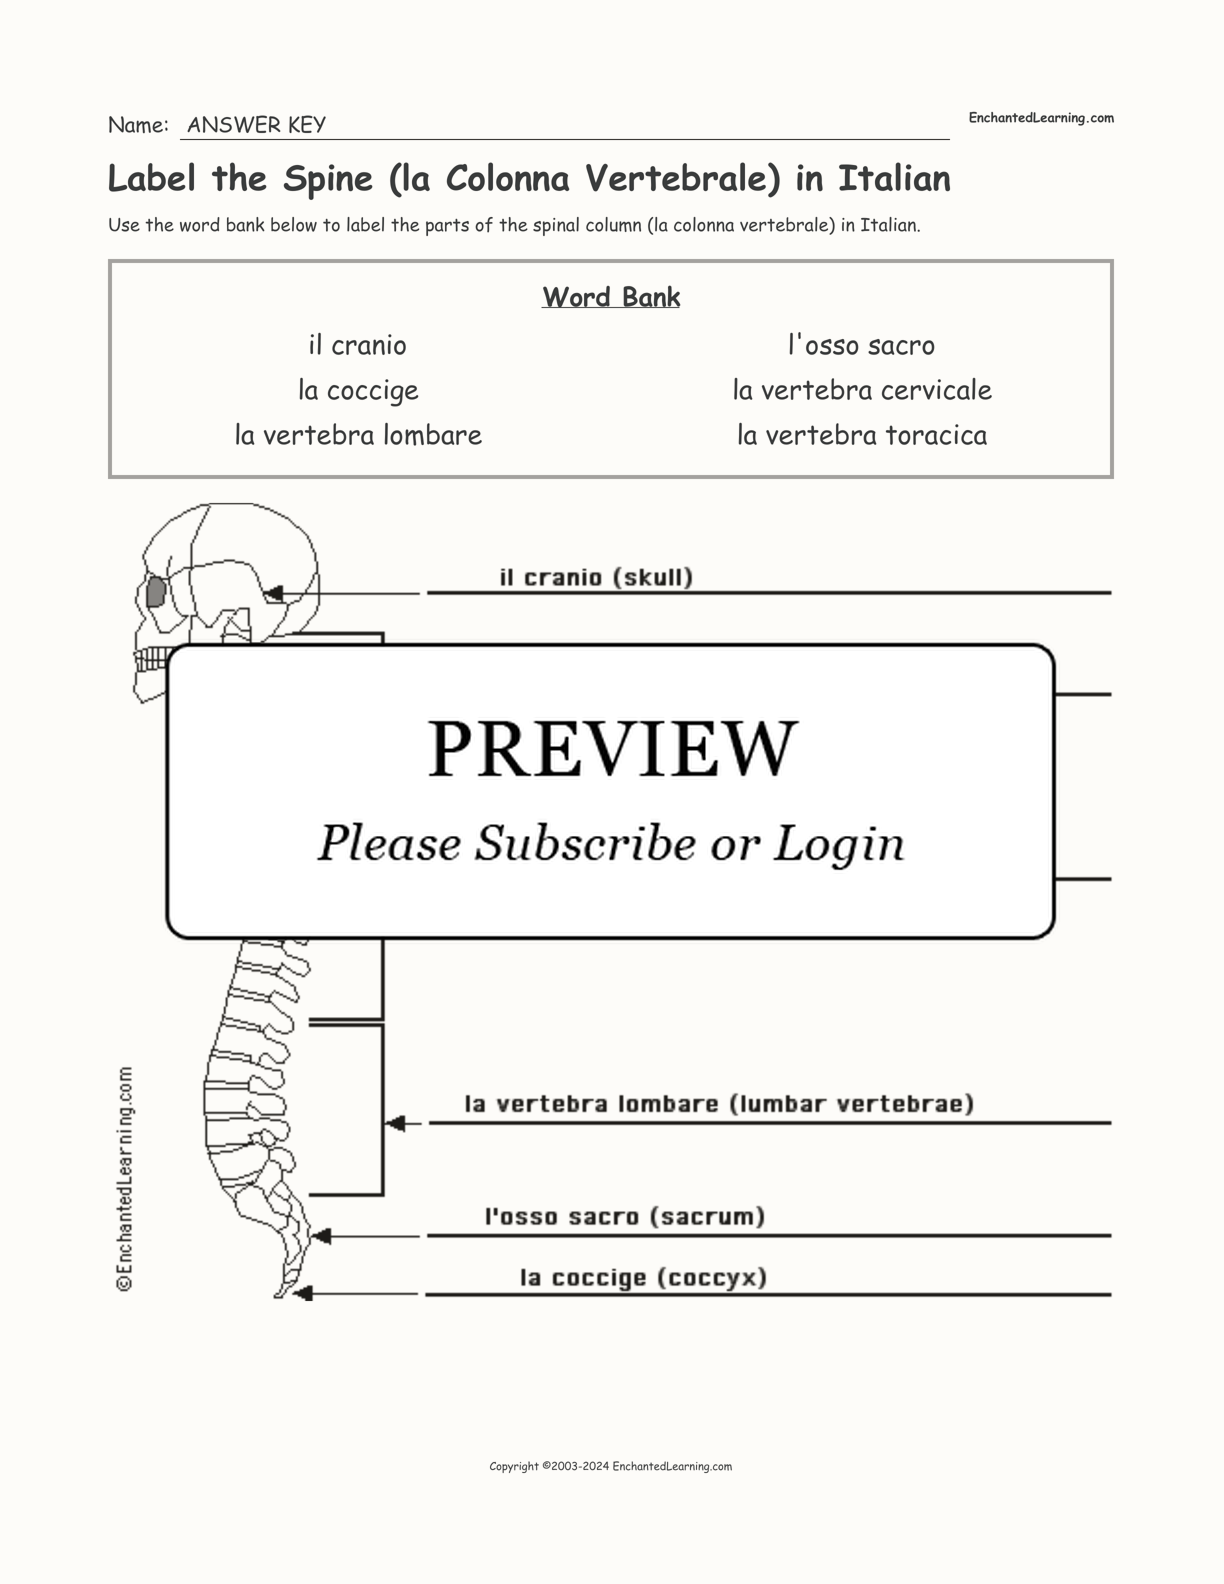 Label the Spine (la Colonna Vertebrale) in Italian interactive worksheet page 2